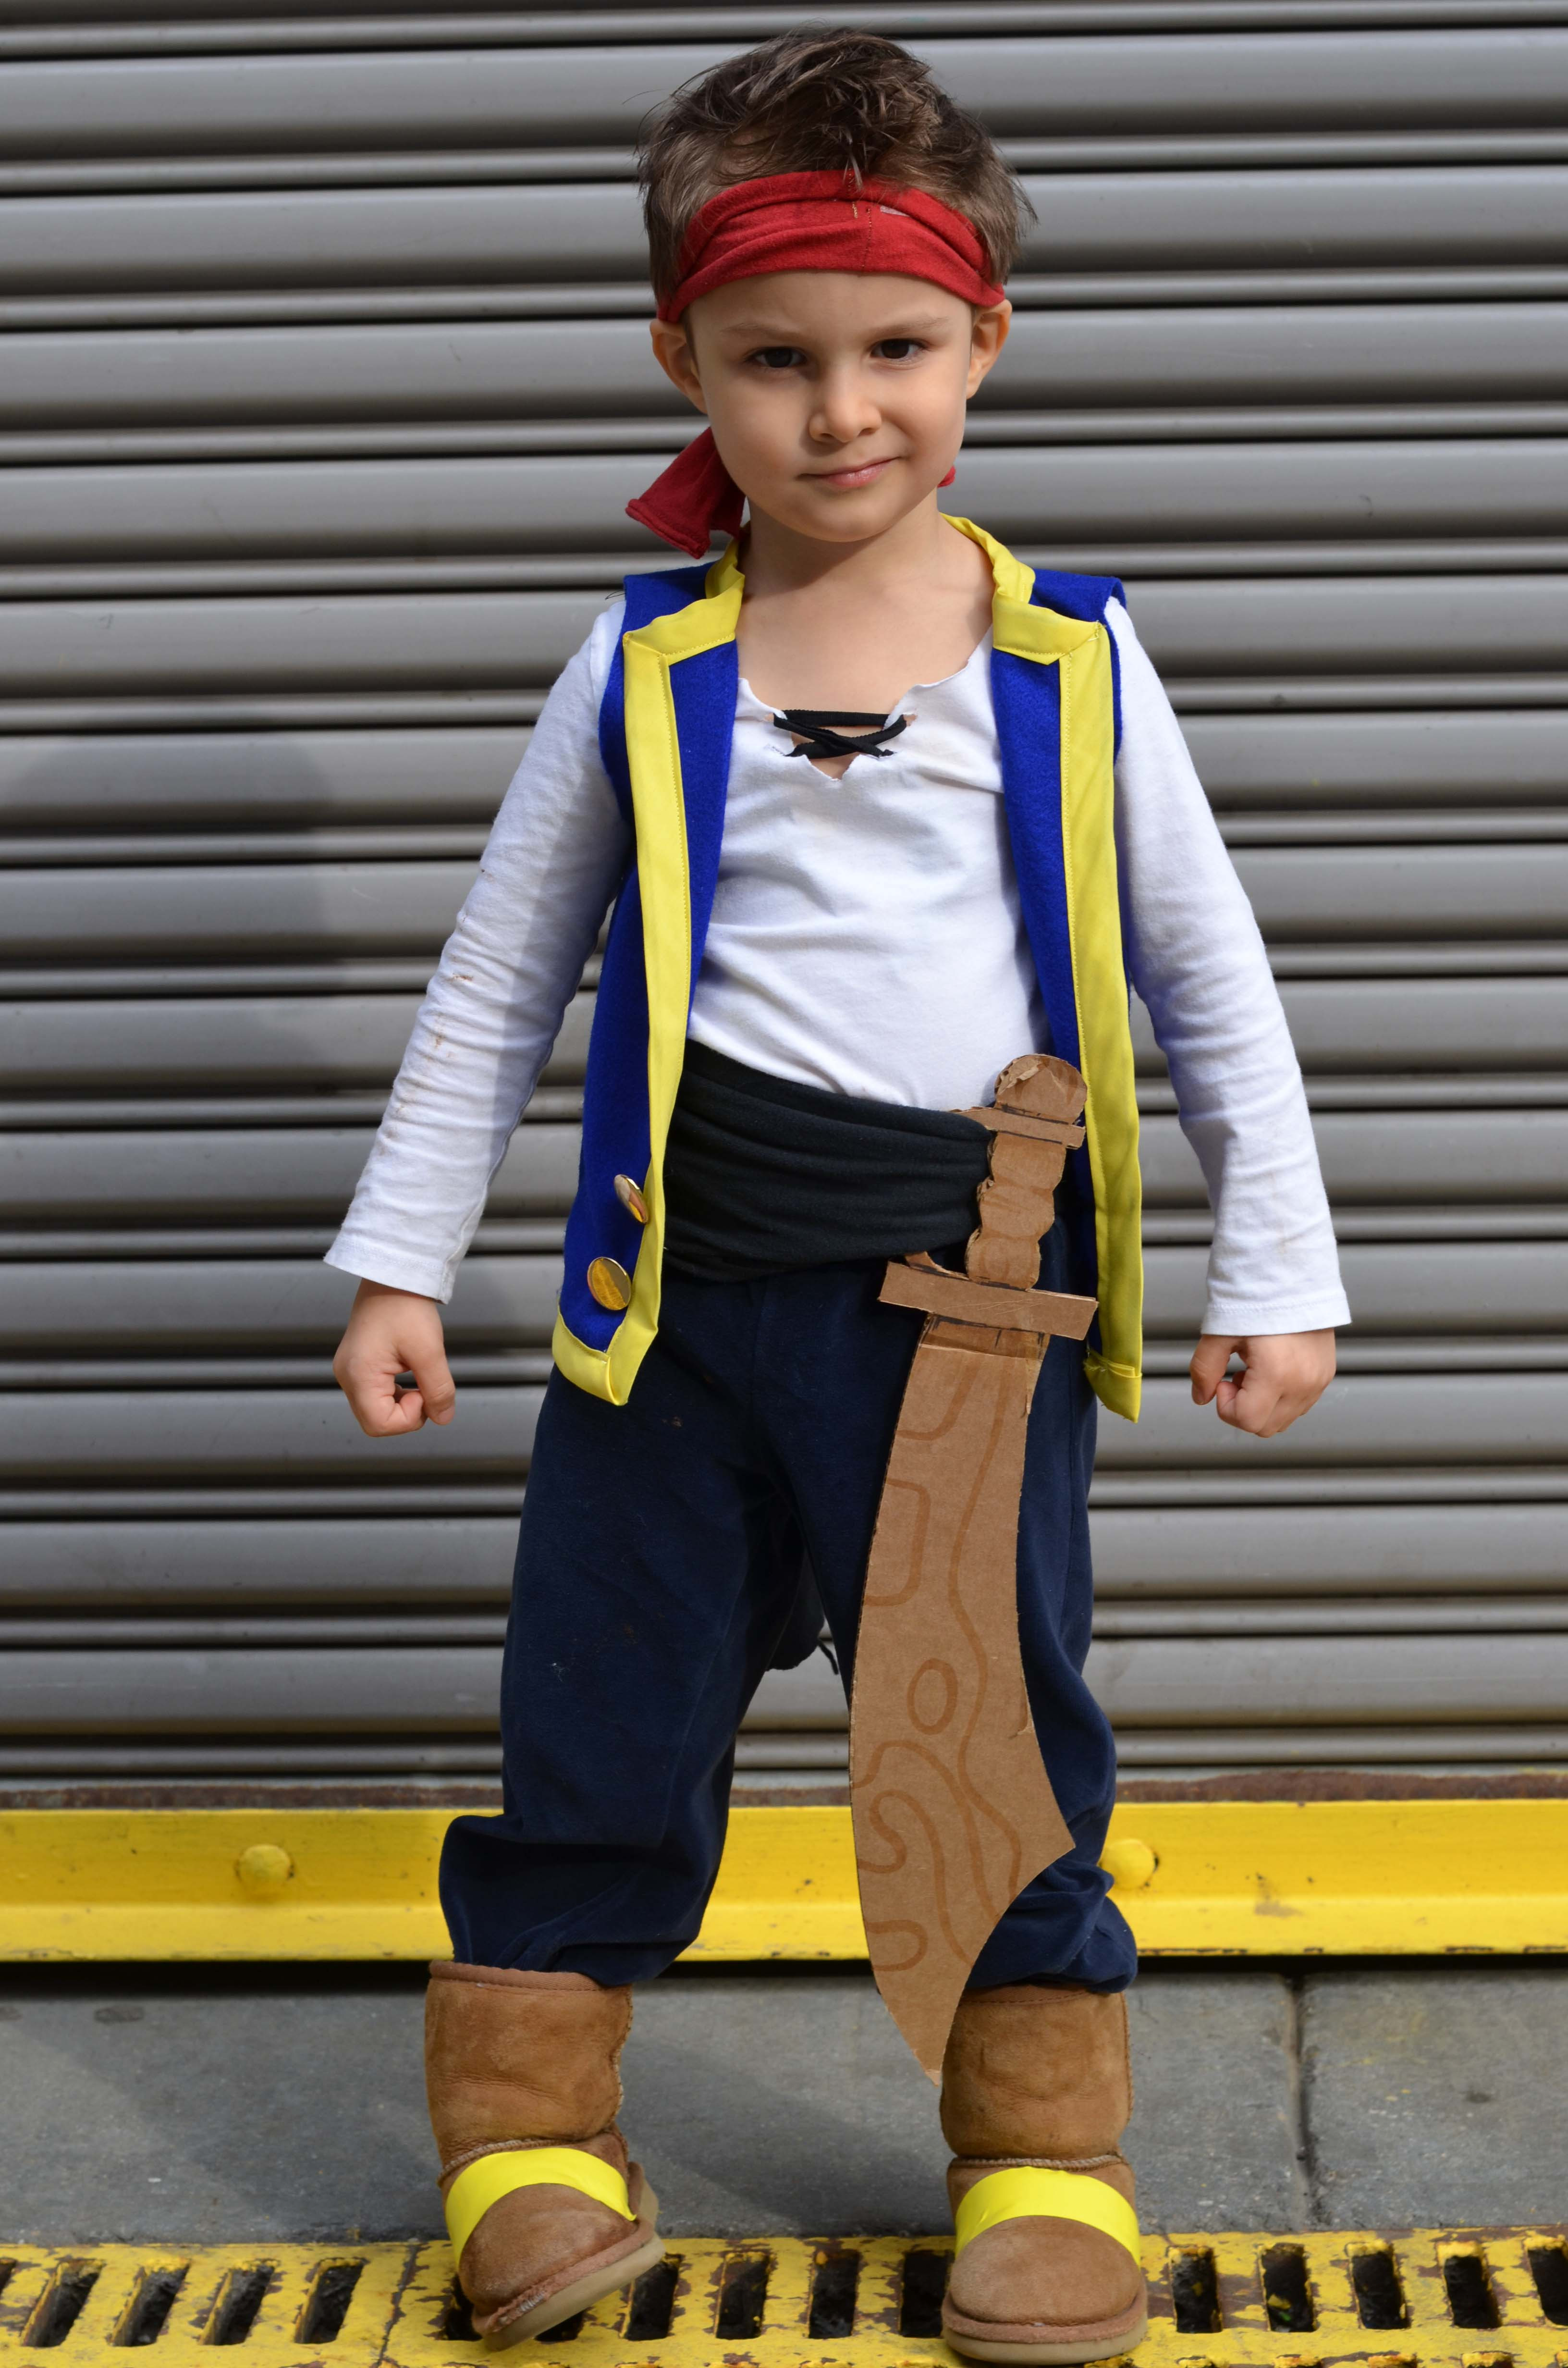 DIY Pirate Costume
 DIY Halloween Costumes for Kids